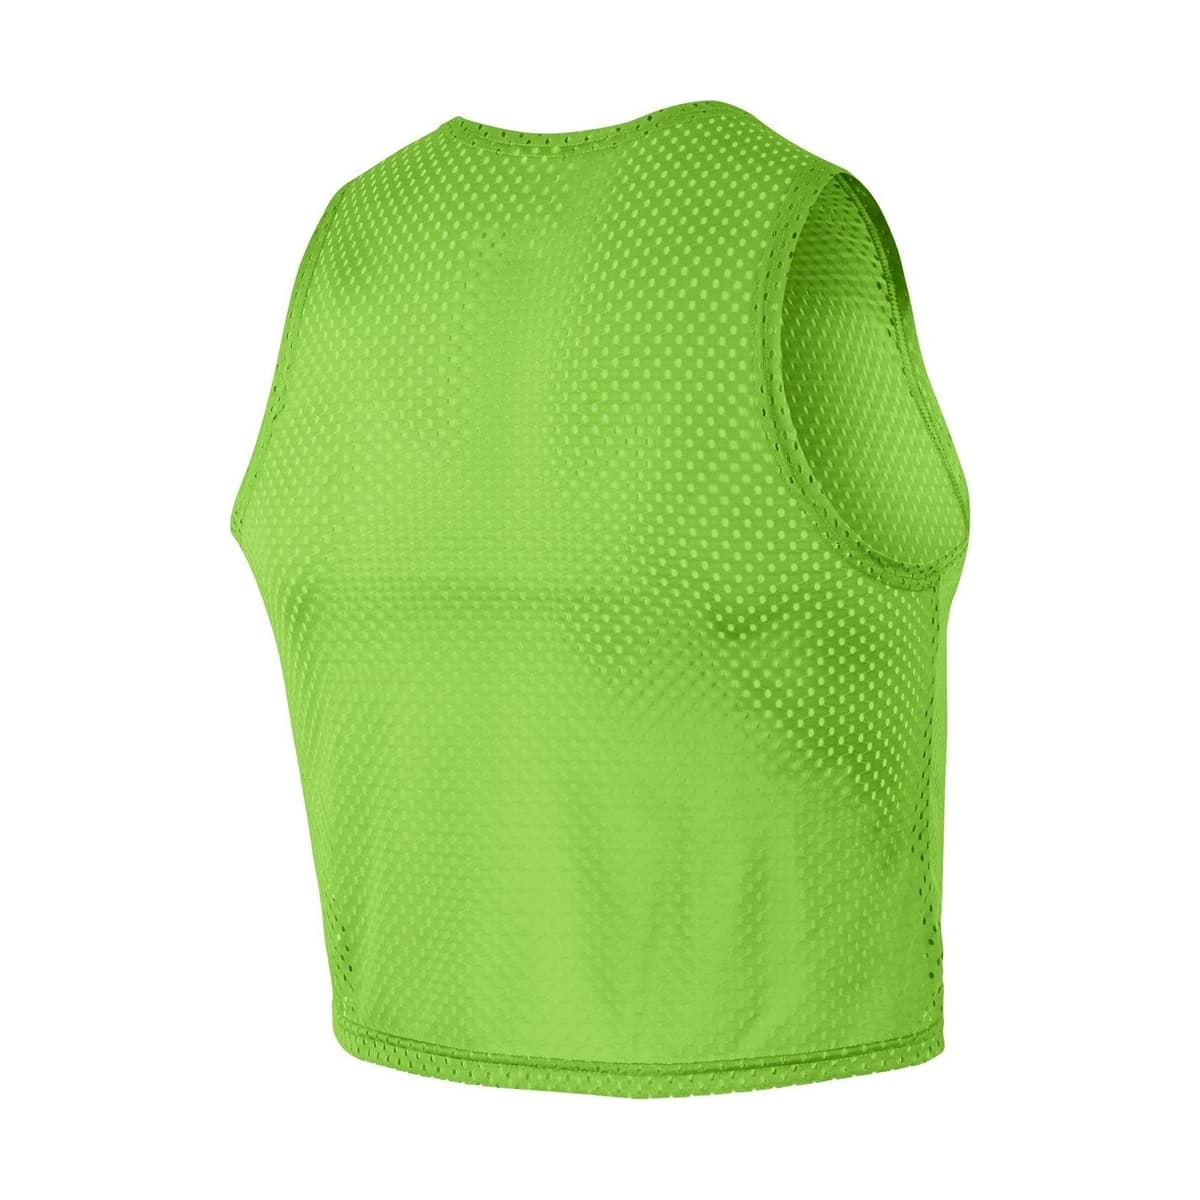 Nike Training Bib Erkek Yeşil Antrenman Tişörtü (725876-313)